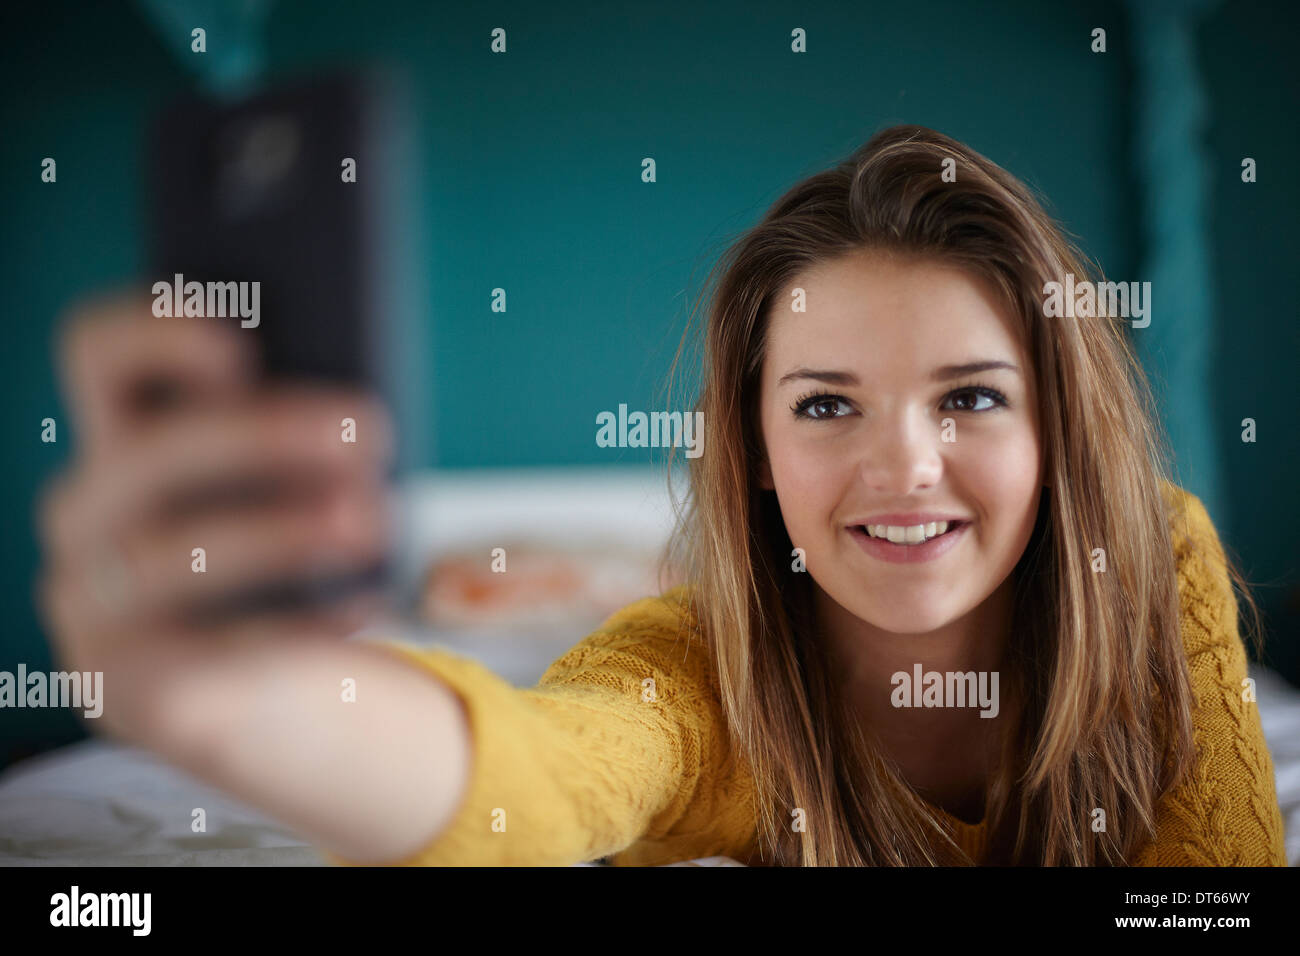 Teenage girl in bedroom taking a selfie Stock Photo